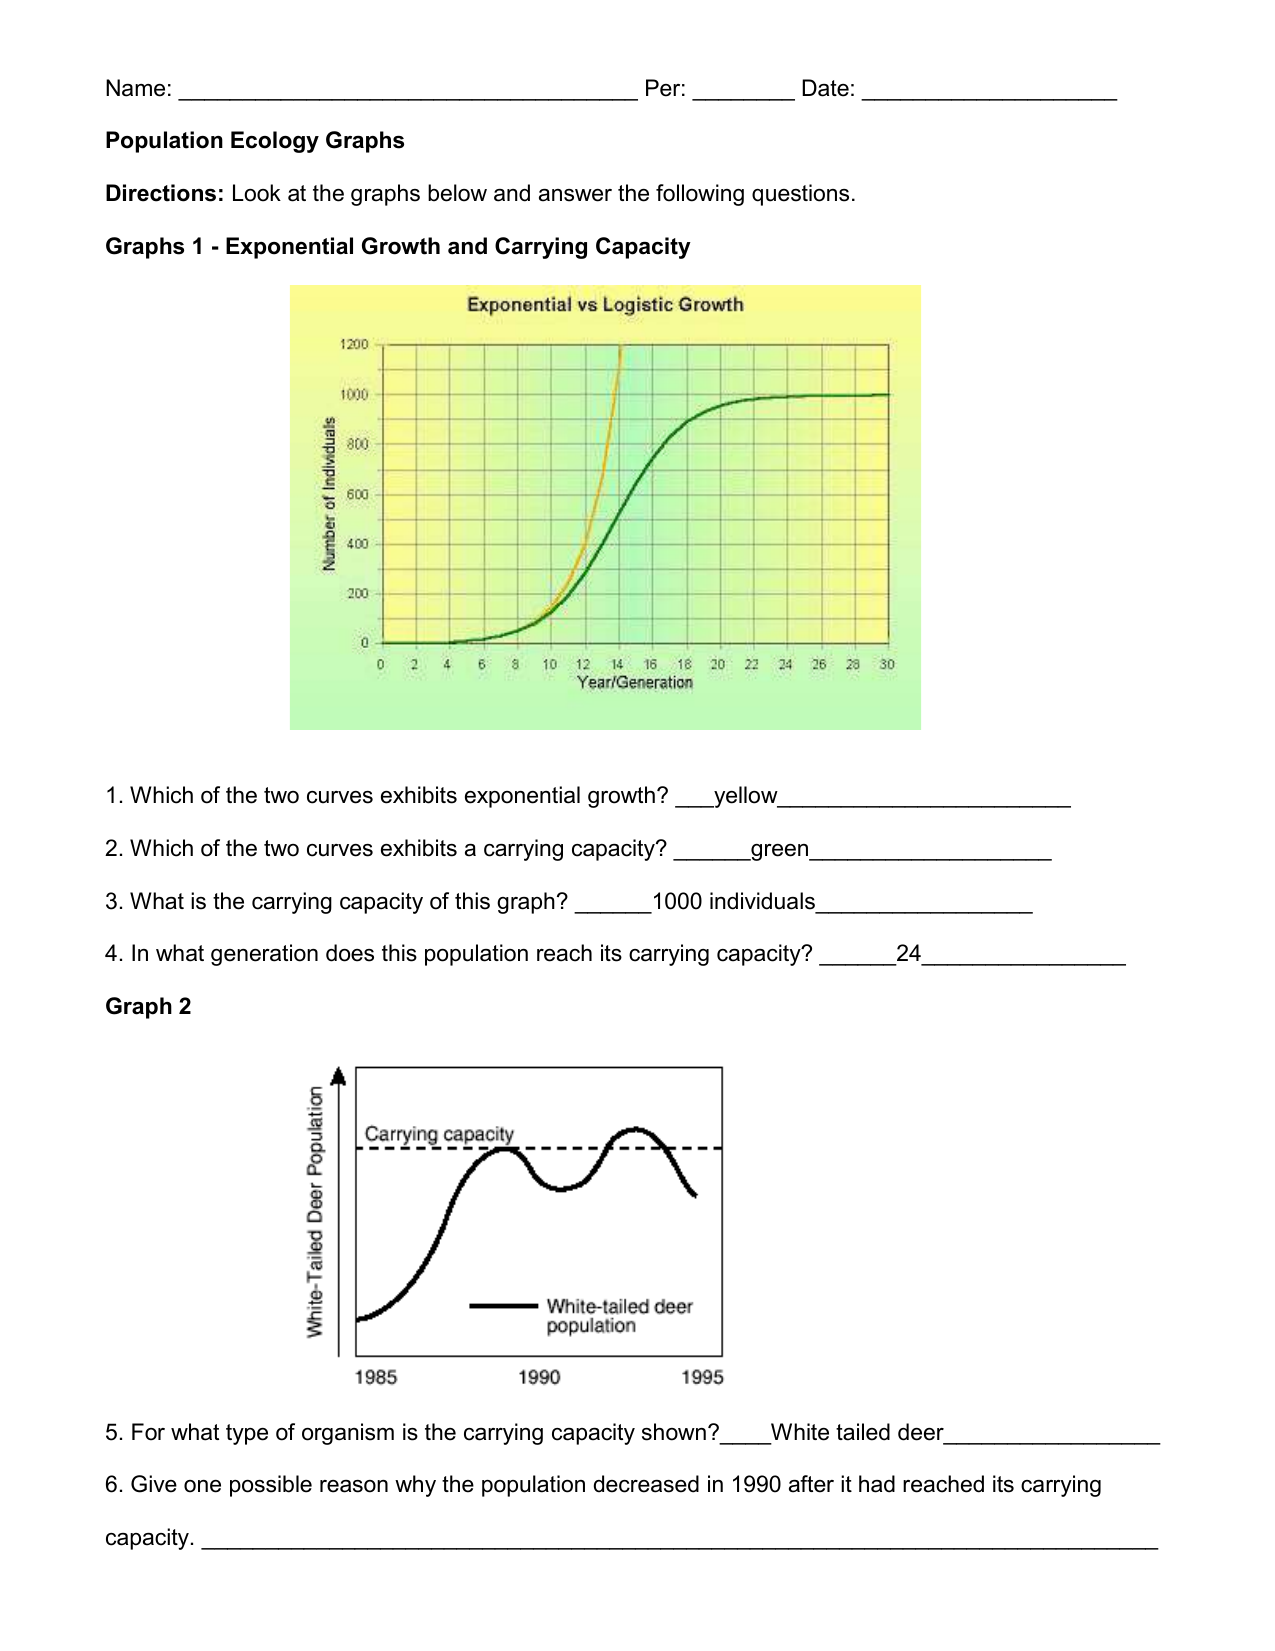 Population-Ecology-Graph-Worksheet key In Population Ecology Graphs Worksheet Answers